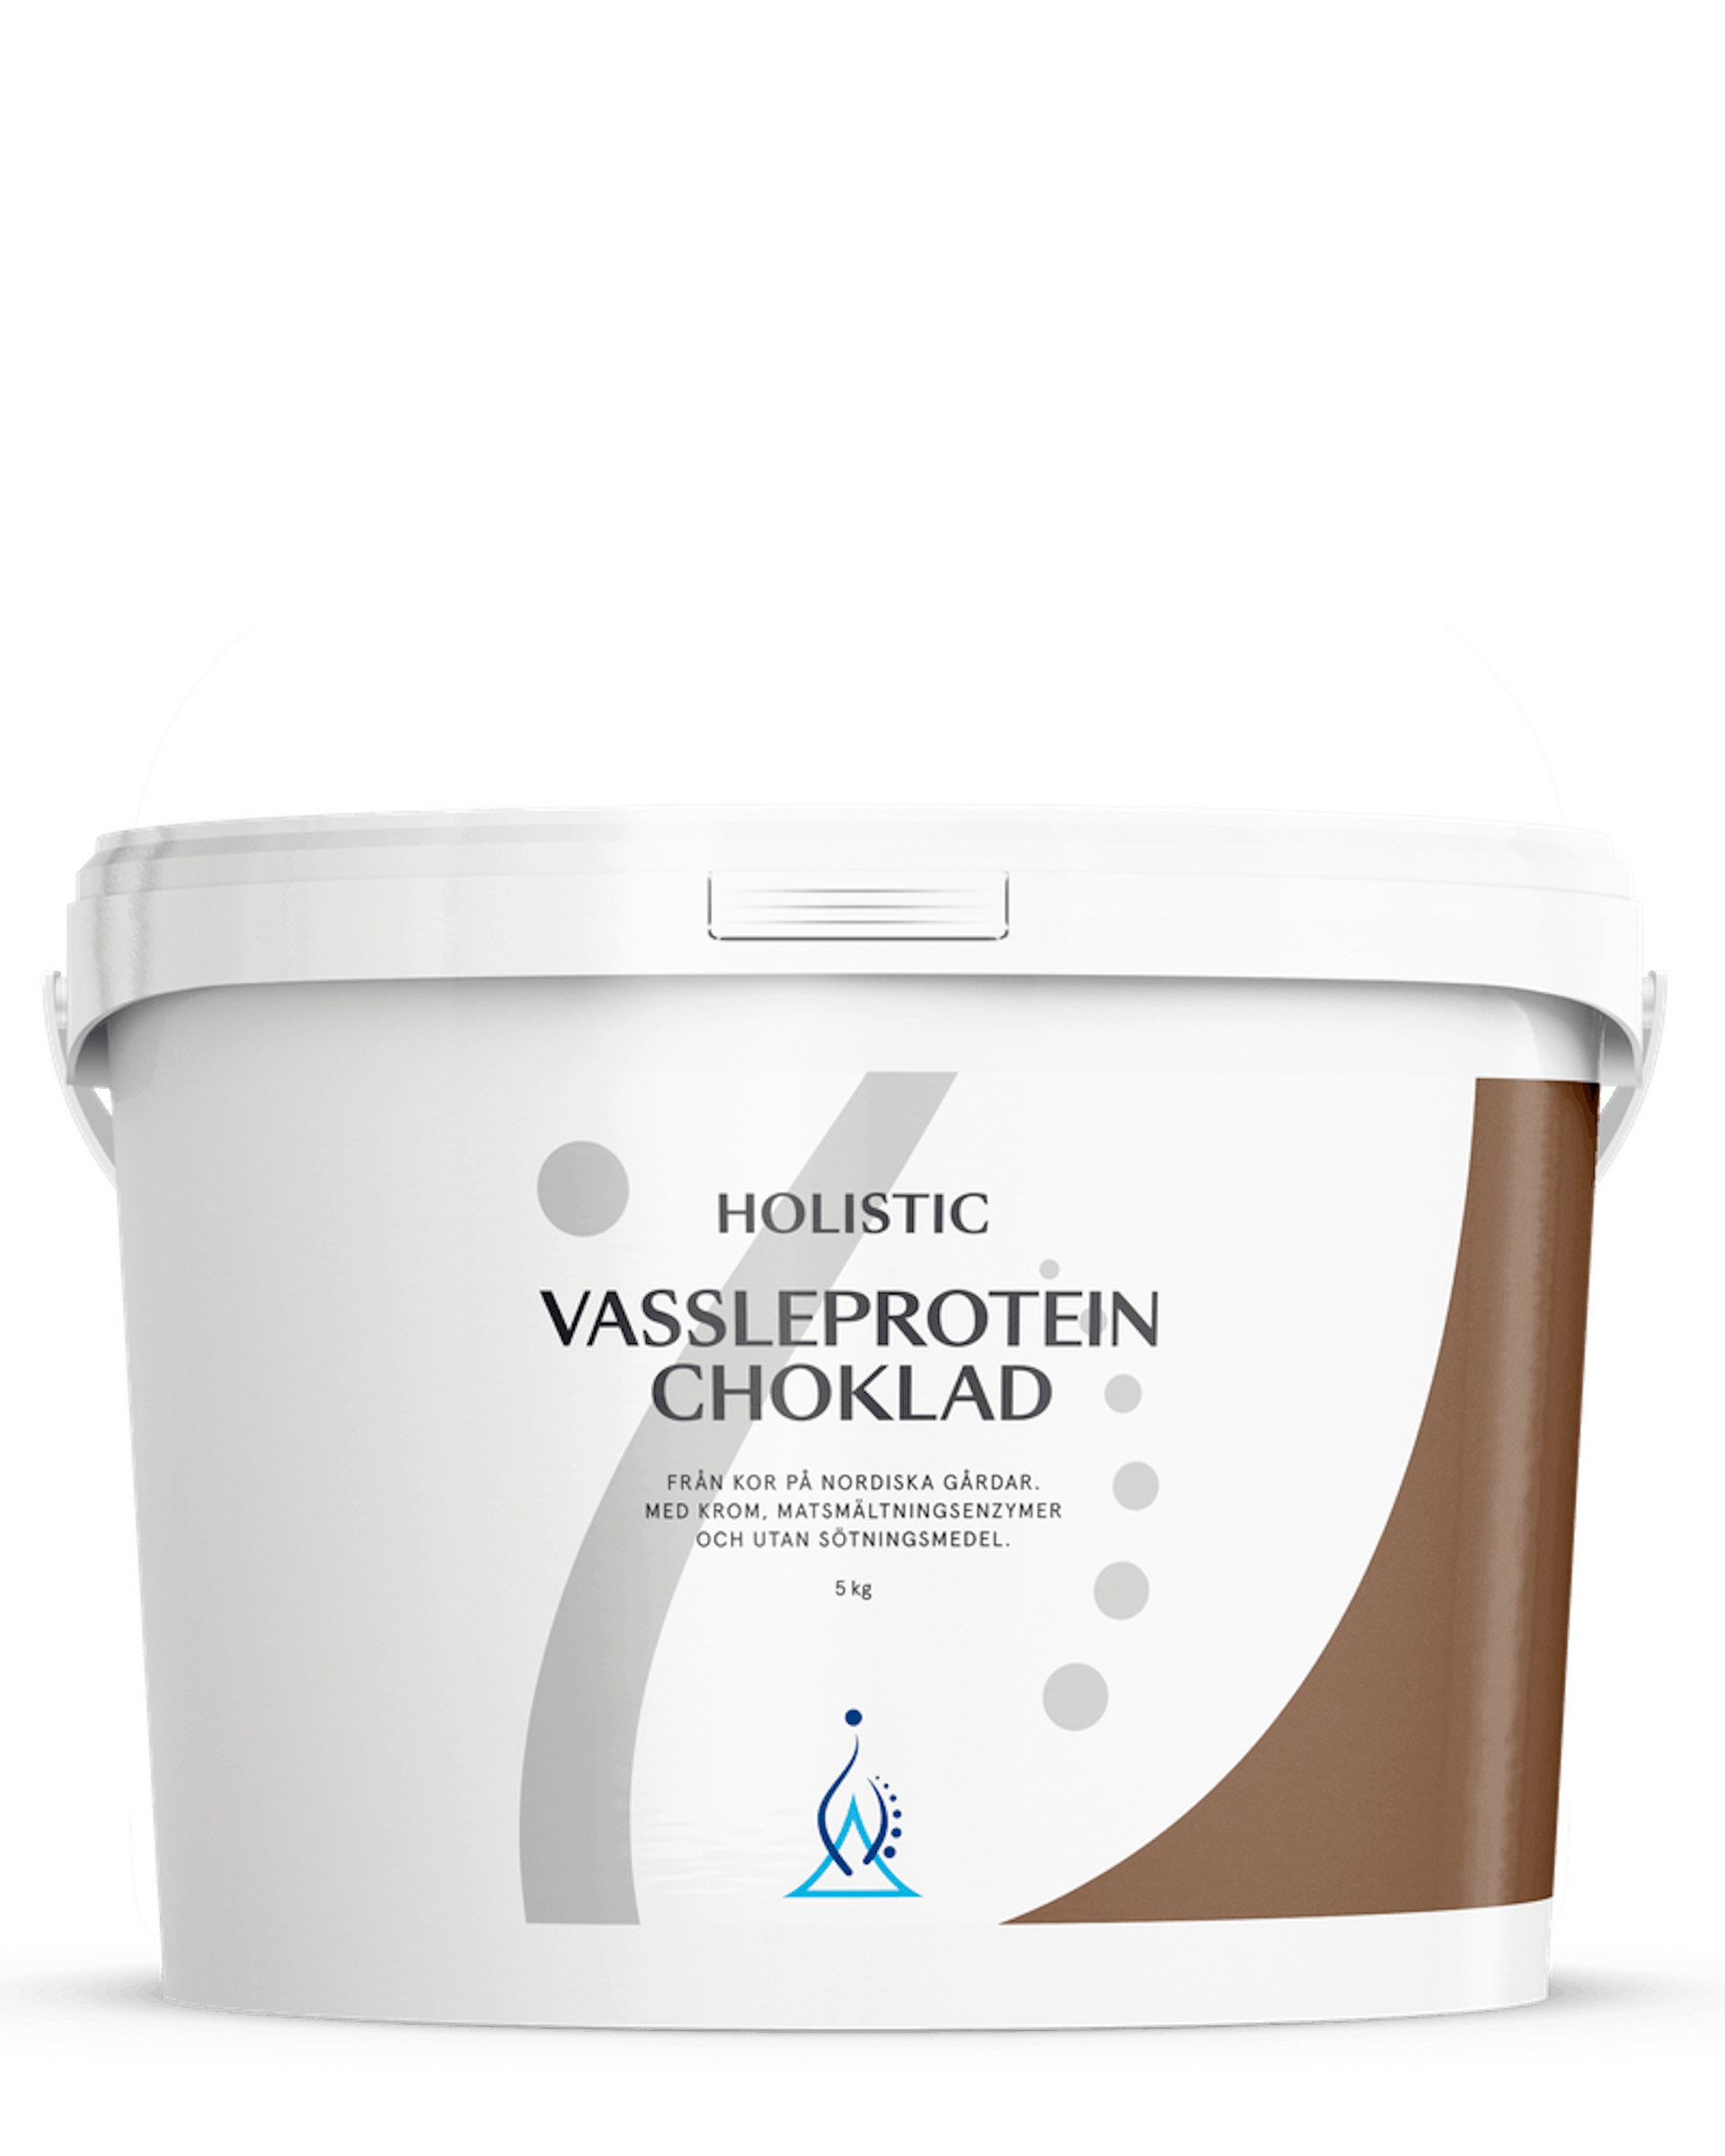 Vassleprotein choklad, 5 kg